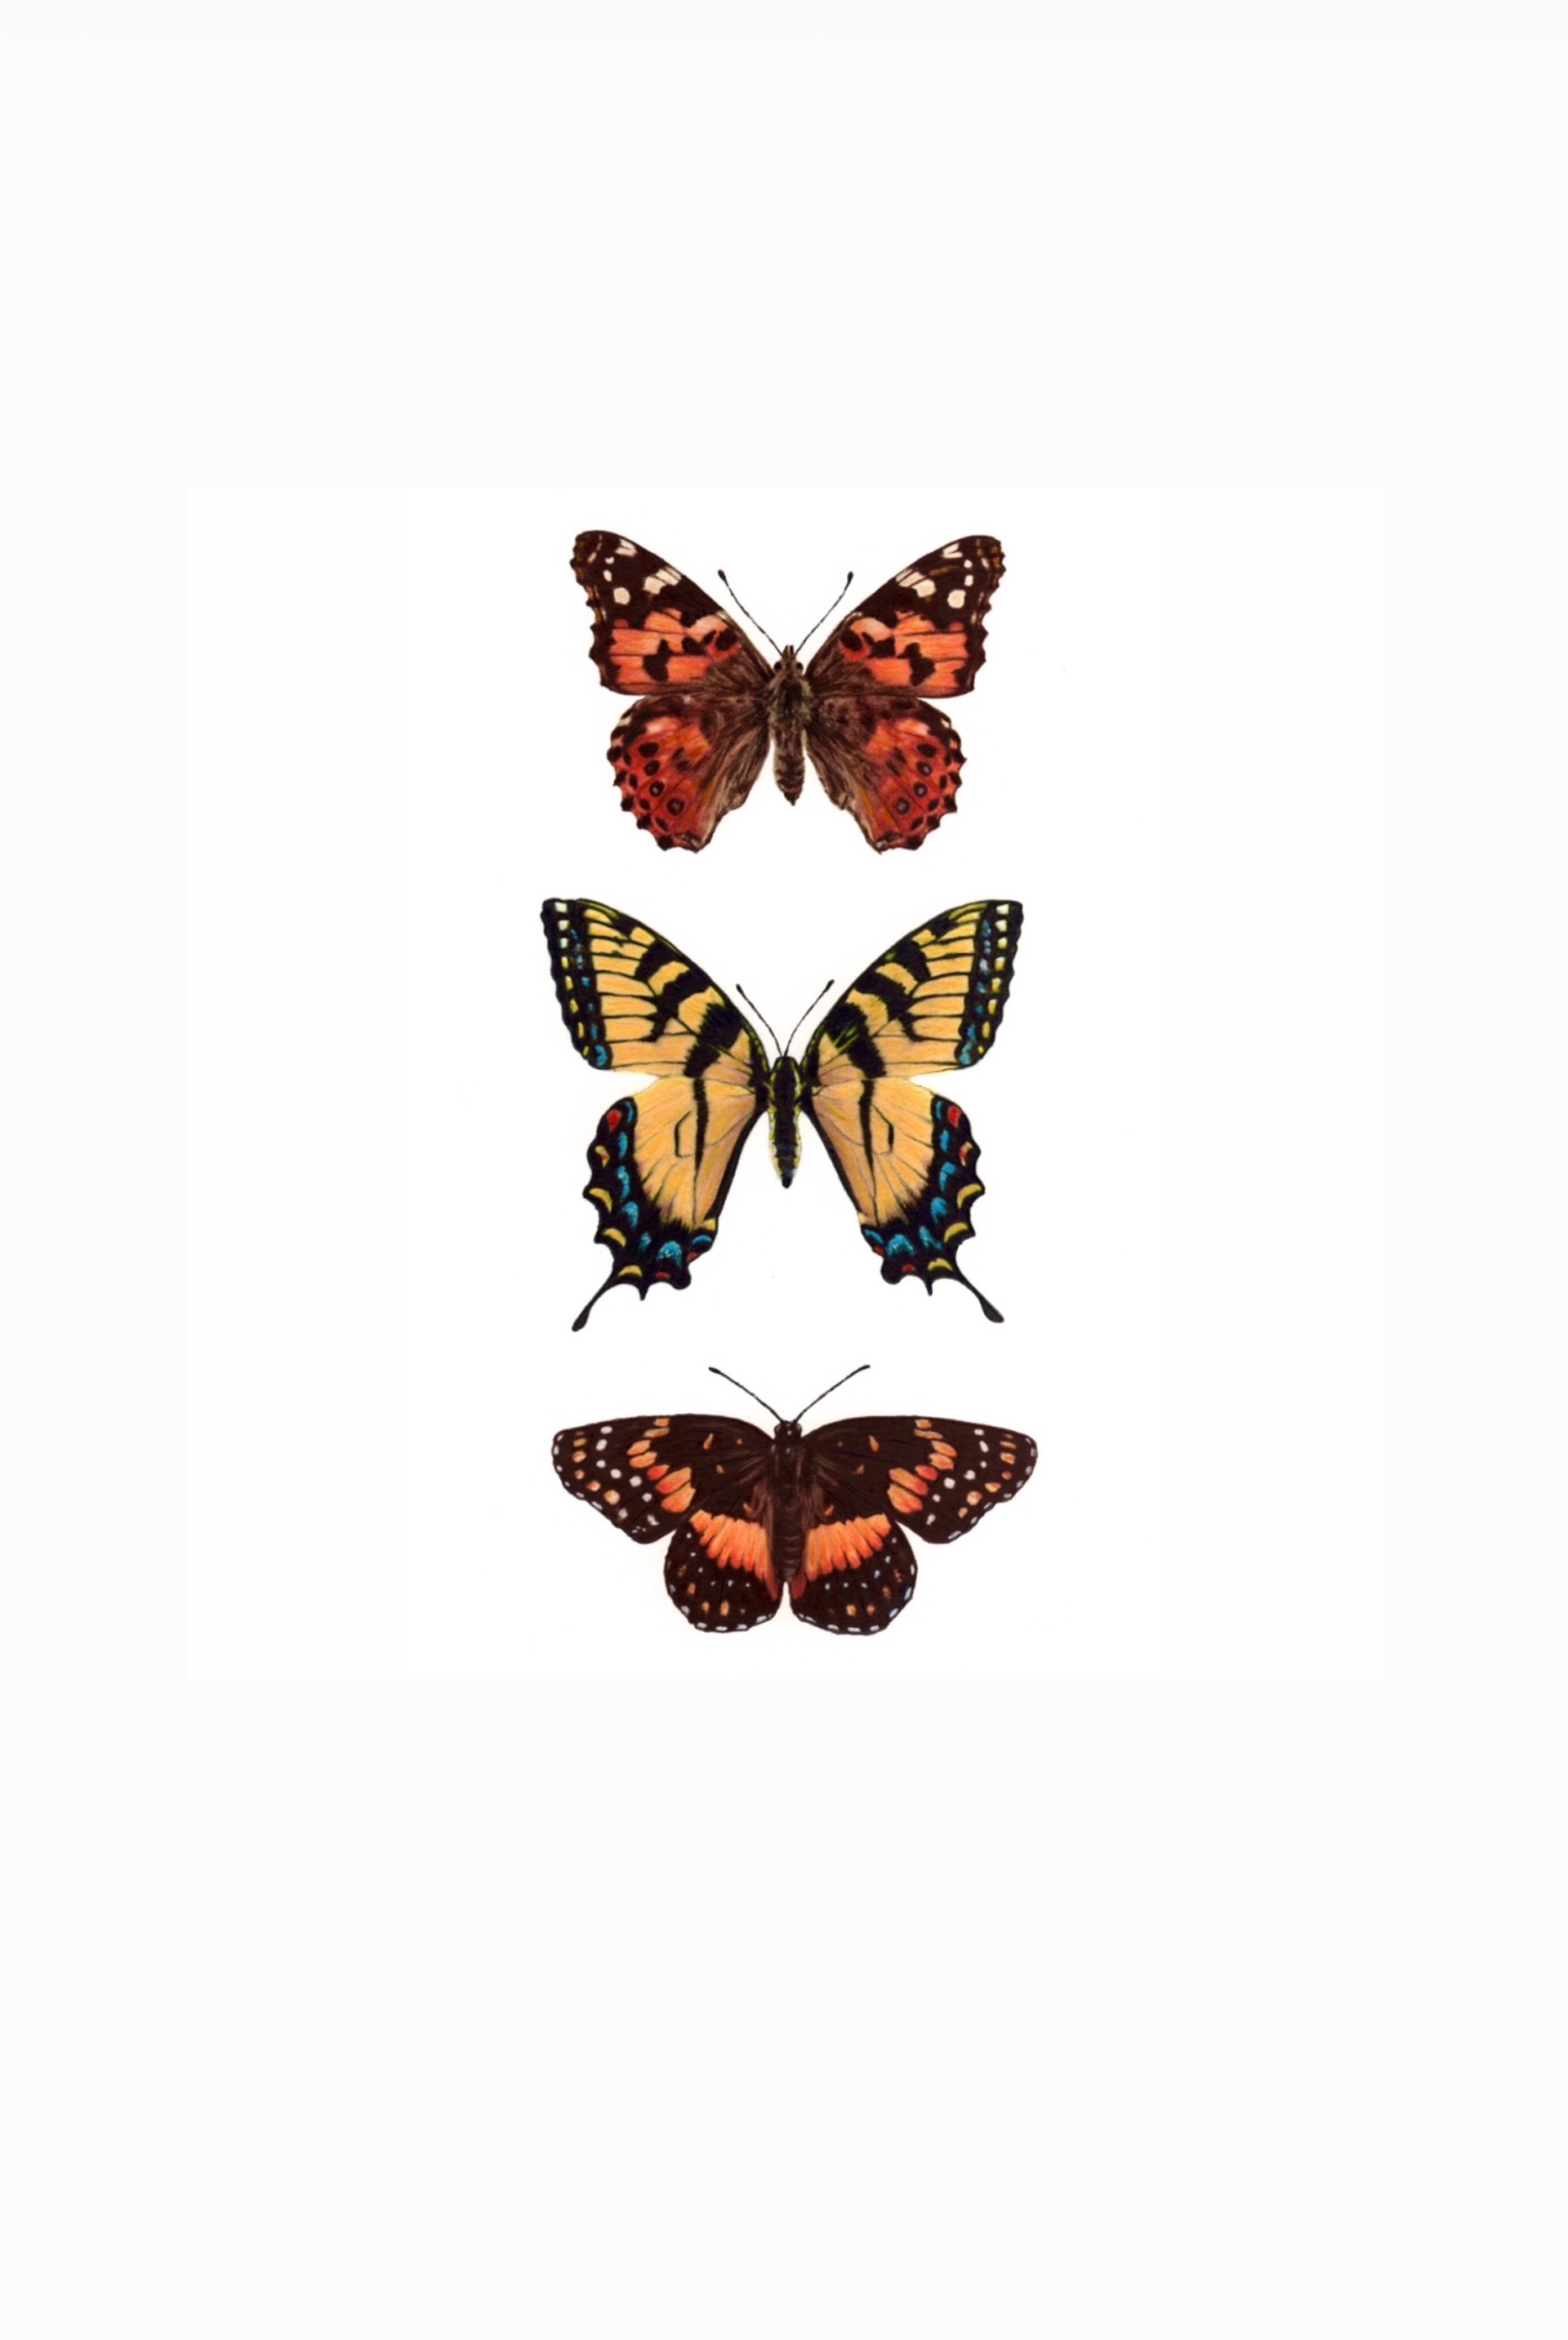 Butterflies of the Southwest by J.R. Hess